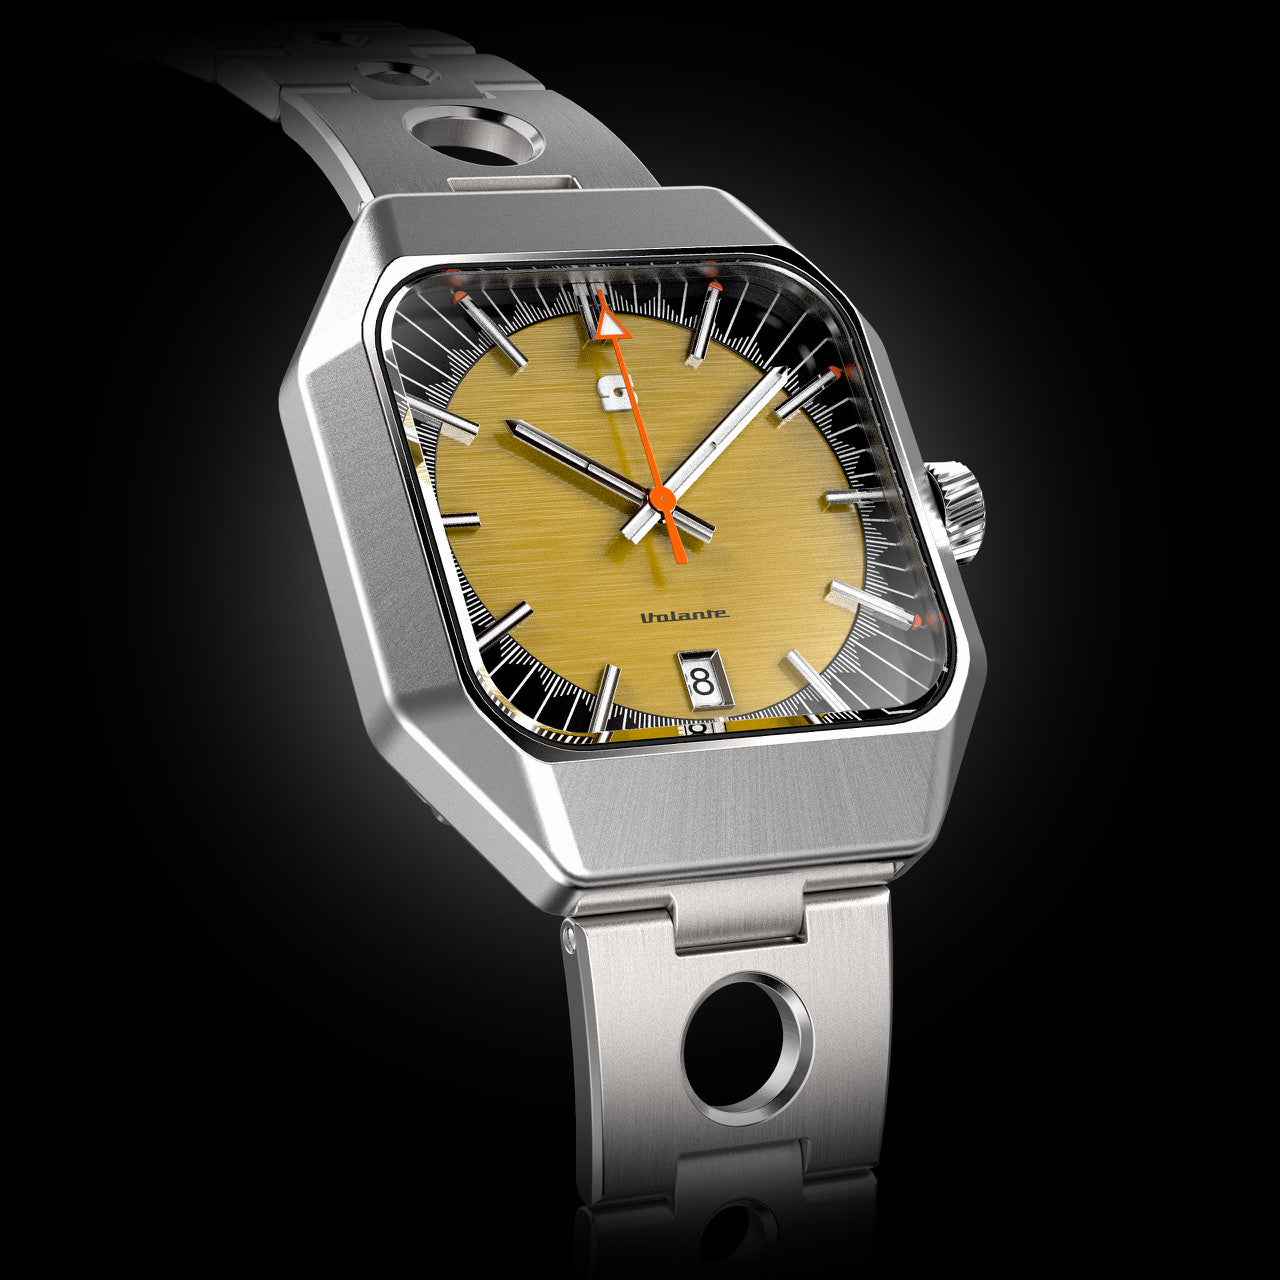 Straton Watch Co.'s new Volante and Sportiva B32BF024-D9B2-45B1-B87C-653F522129BA